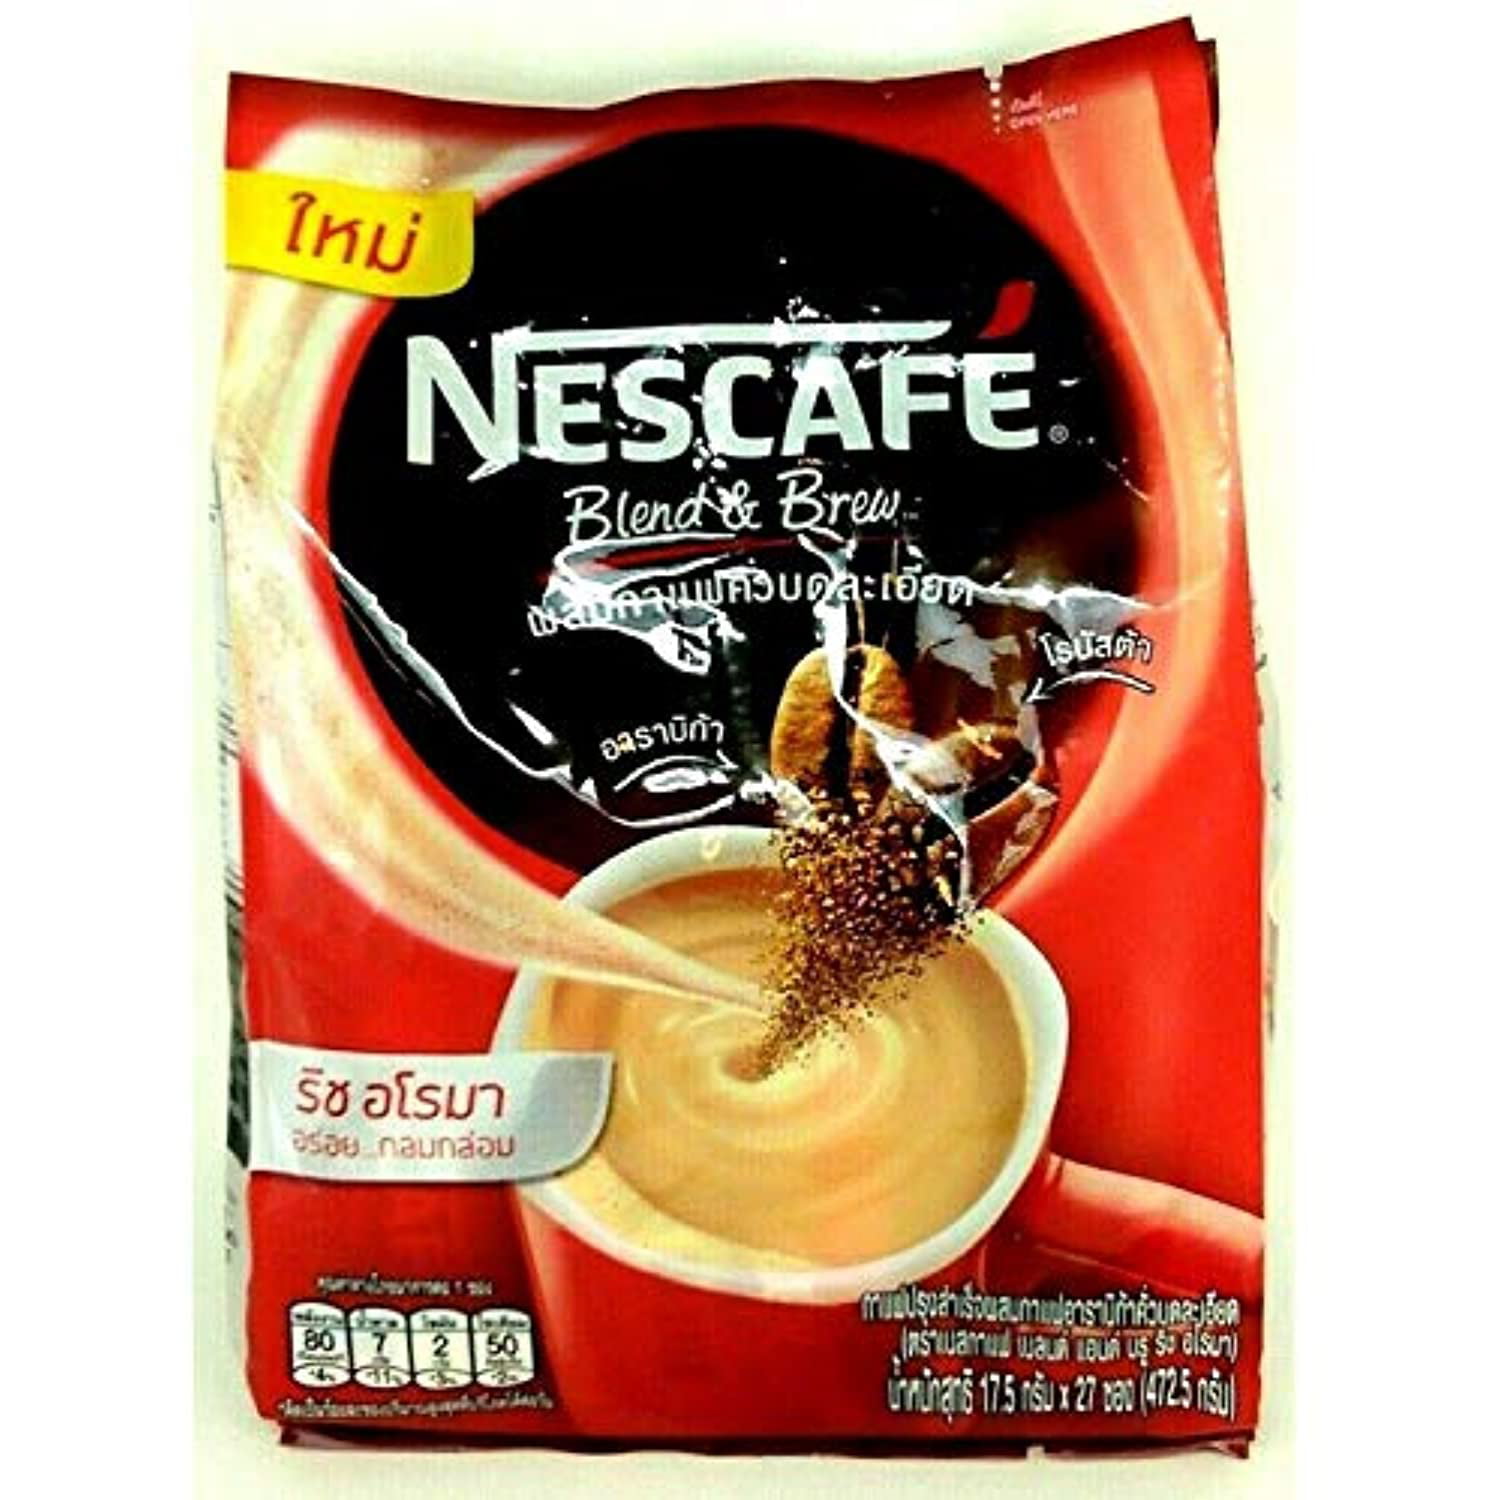 Nescafe 3in1 Classic 28 Sticks Coffee – European Flavors – Polish